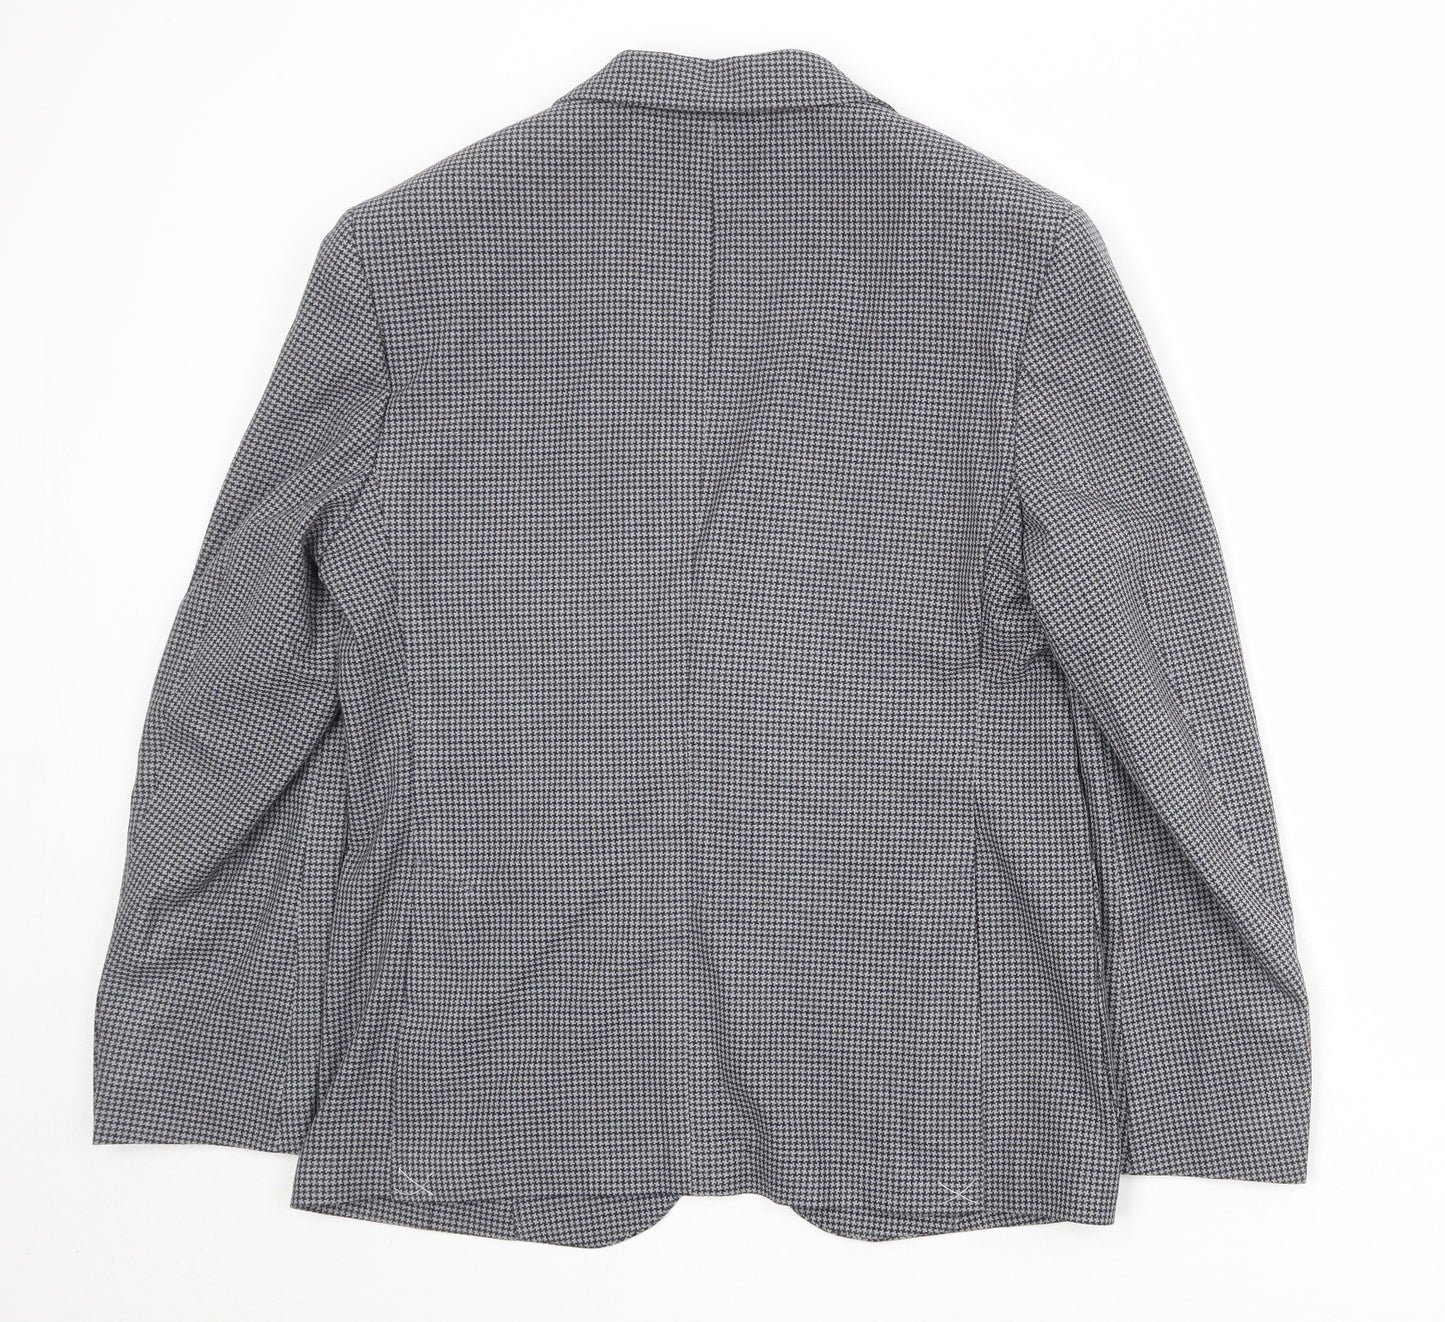 Marks and Spencer Mens Grey Geometric Polyester Jacket Blazer Size 38 Regular